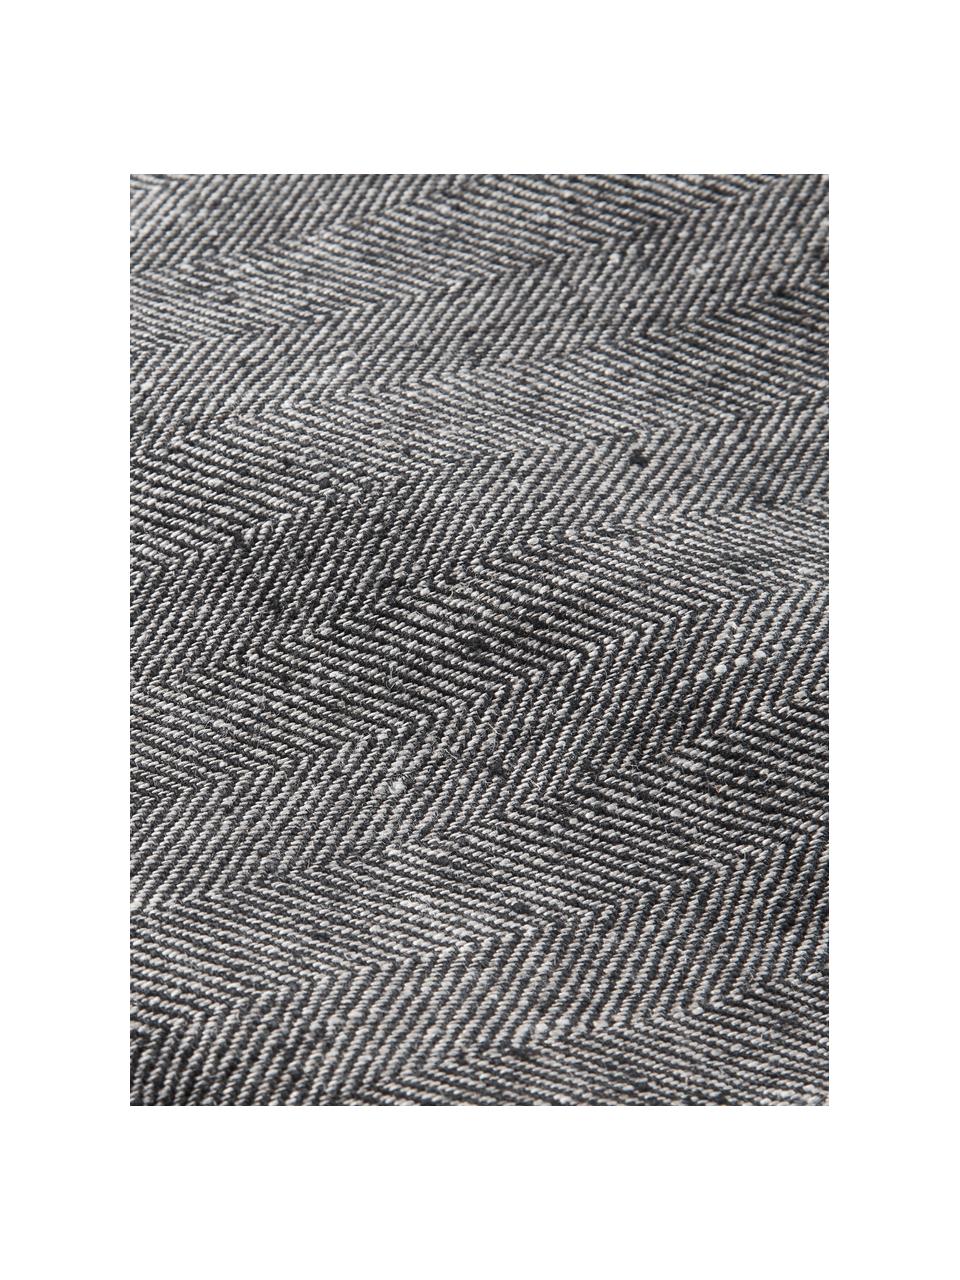 Linnen tafelloper Audra met visgraatpatroon, 100% linnen, Zwart, grijs, B 46 x L 147 cm